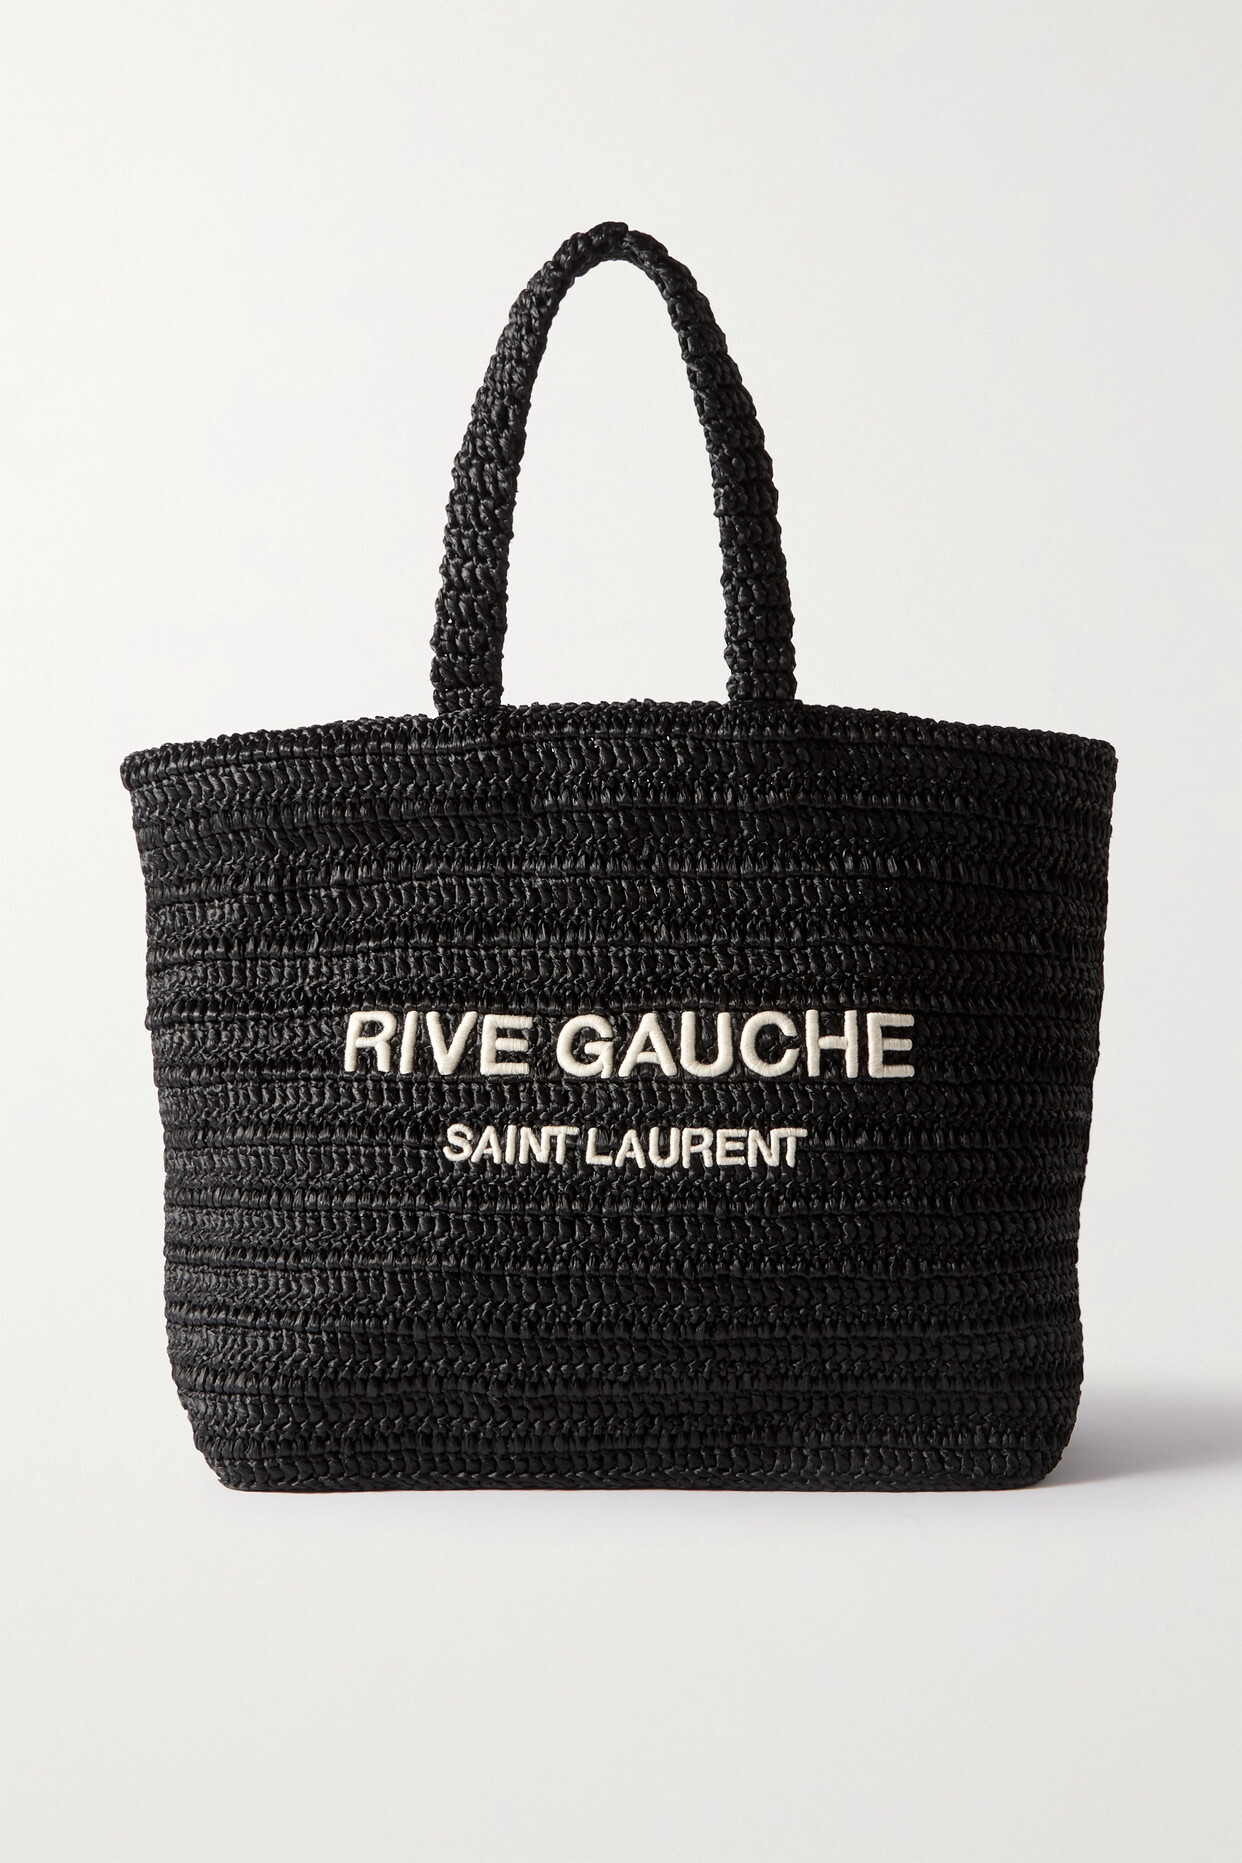 SAINT LAURENT - Rive Gauche Embroidered Crocheted Raffia Tote - Black